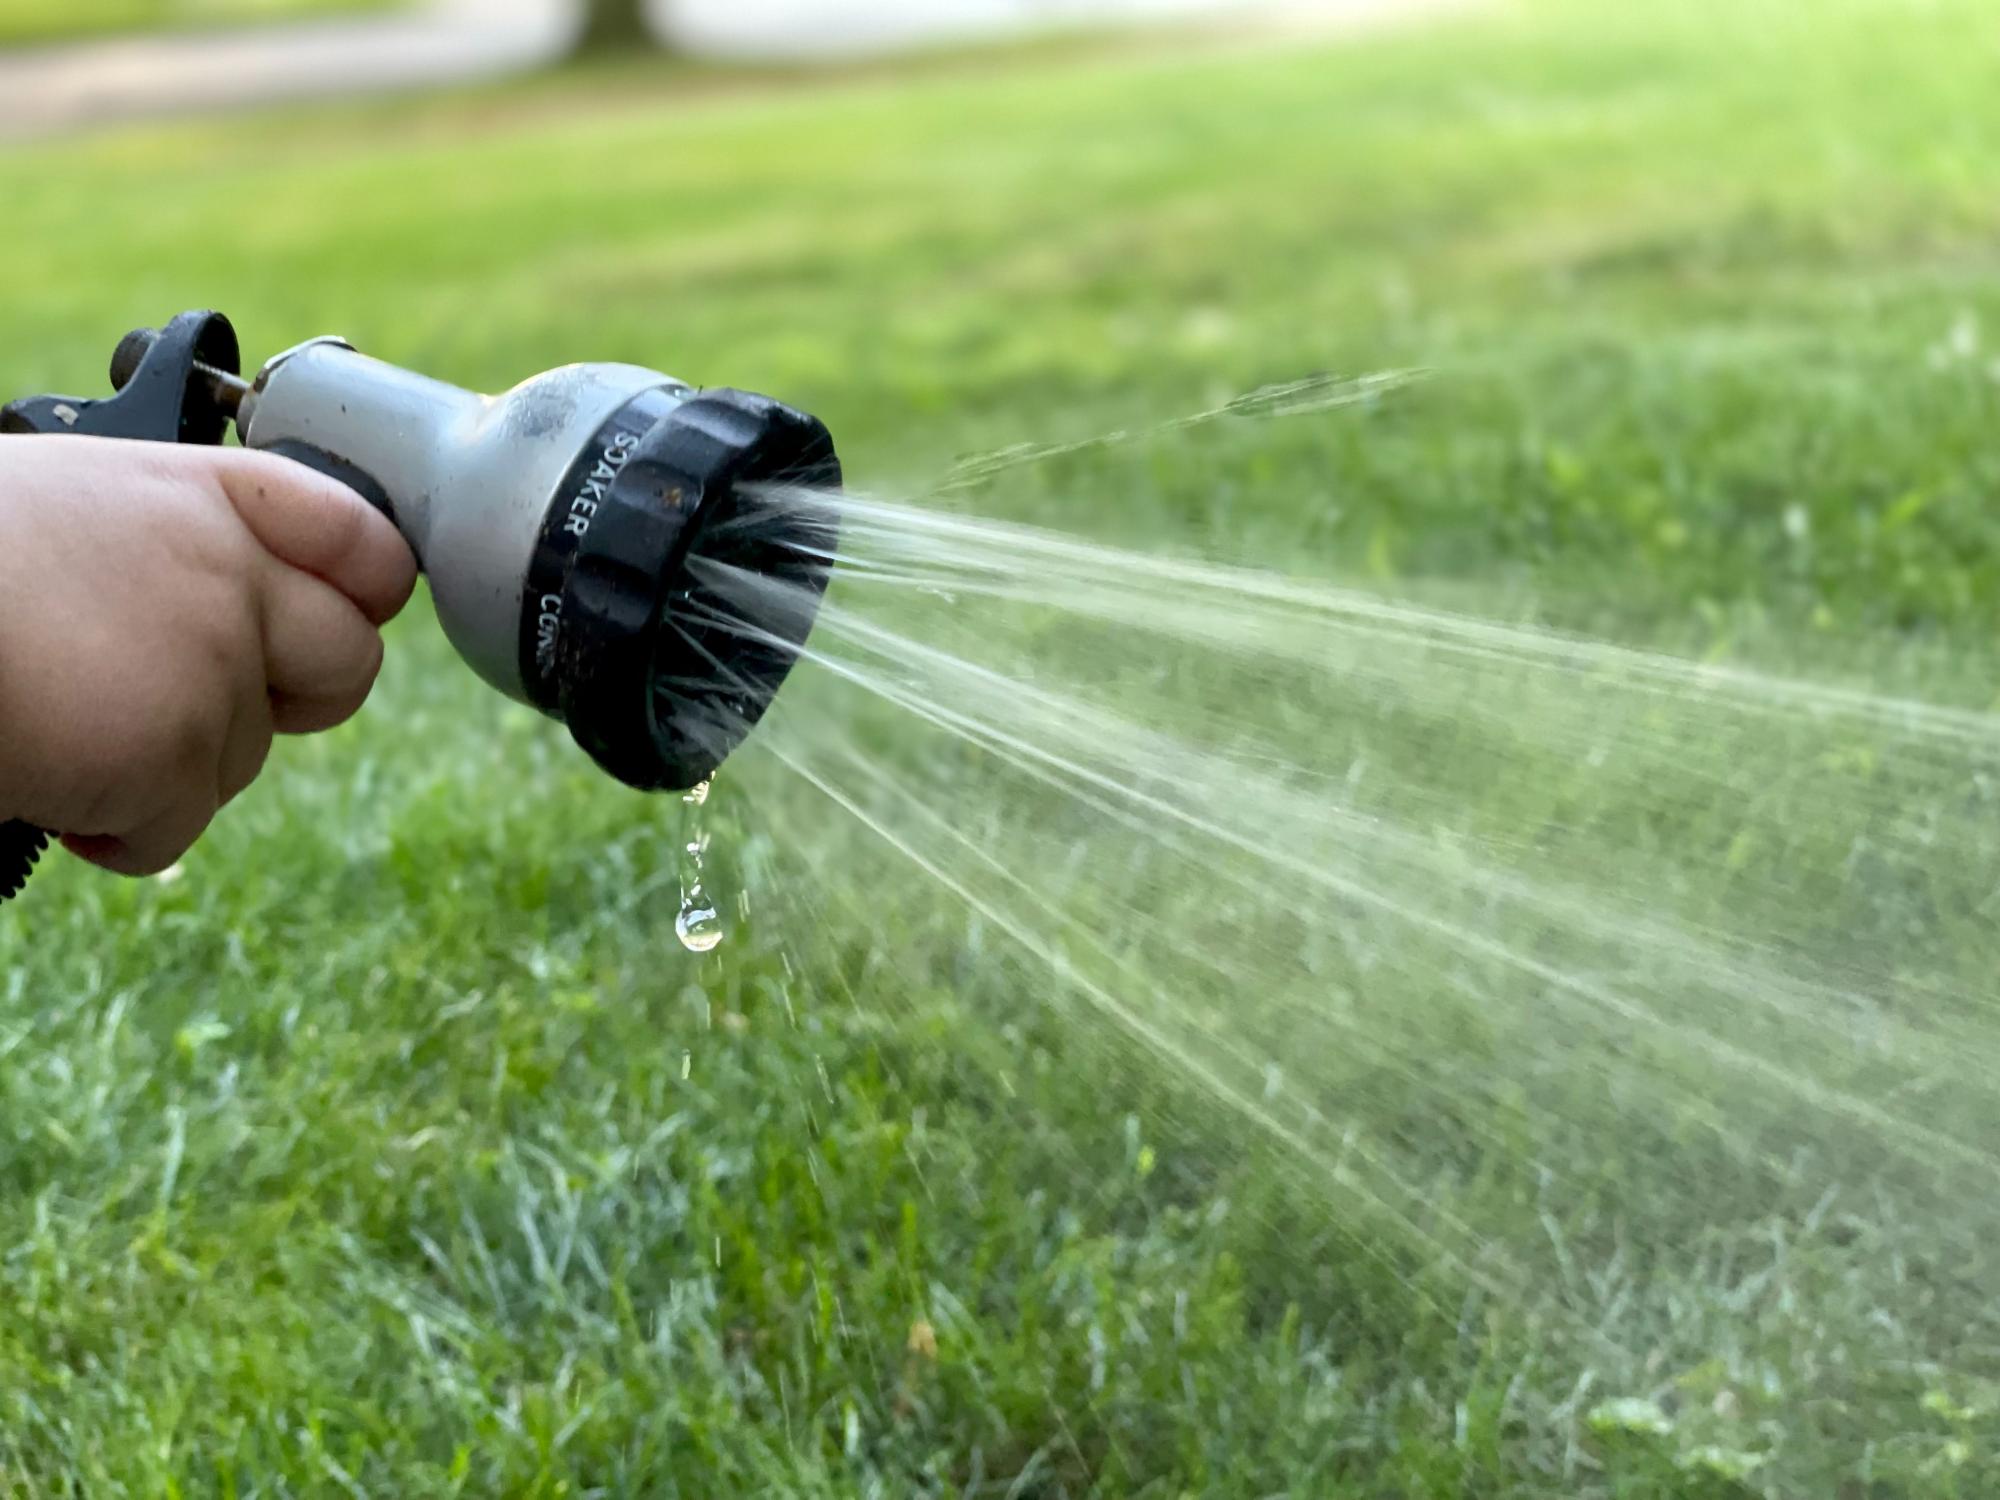 Water sprinkler hose attachment